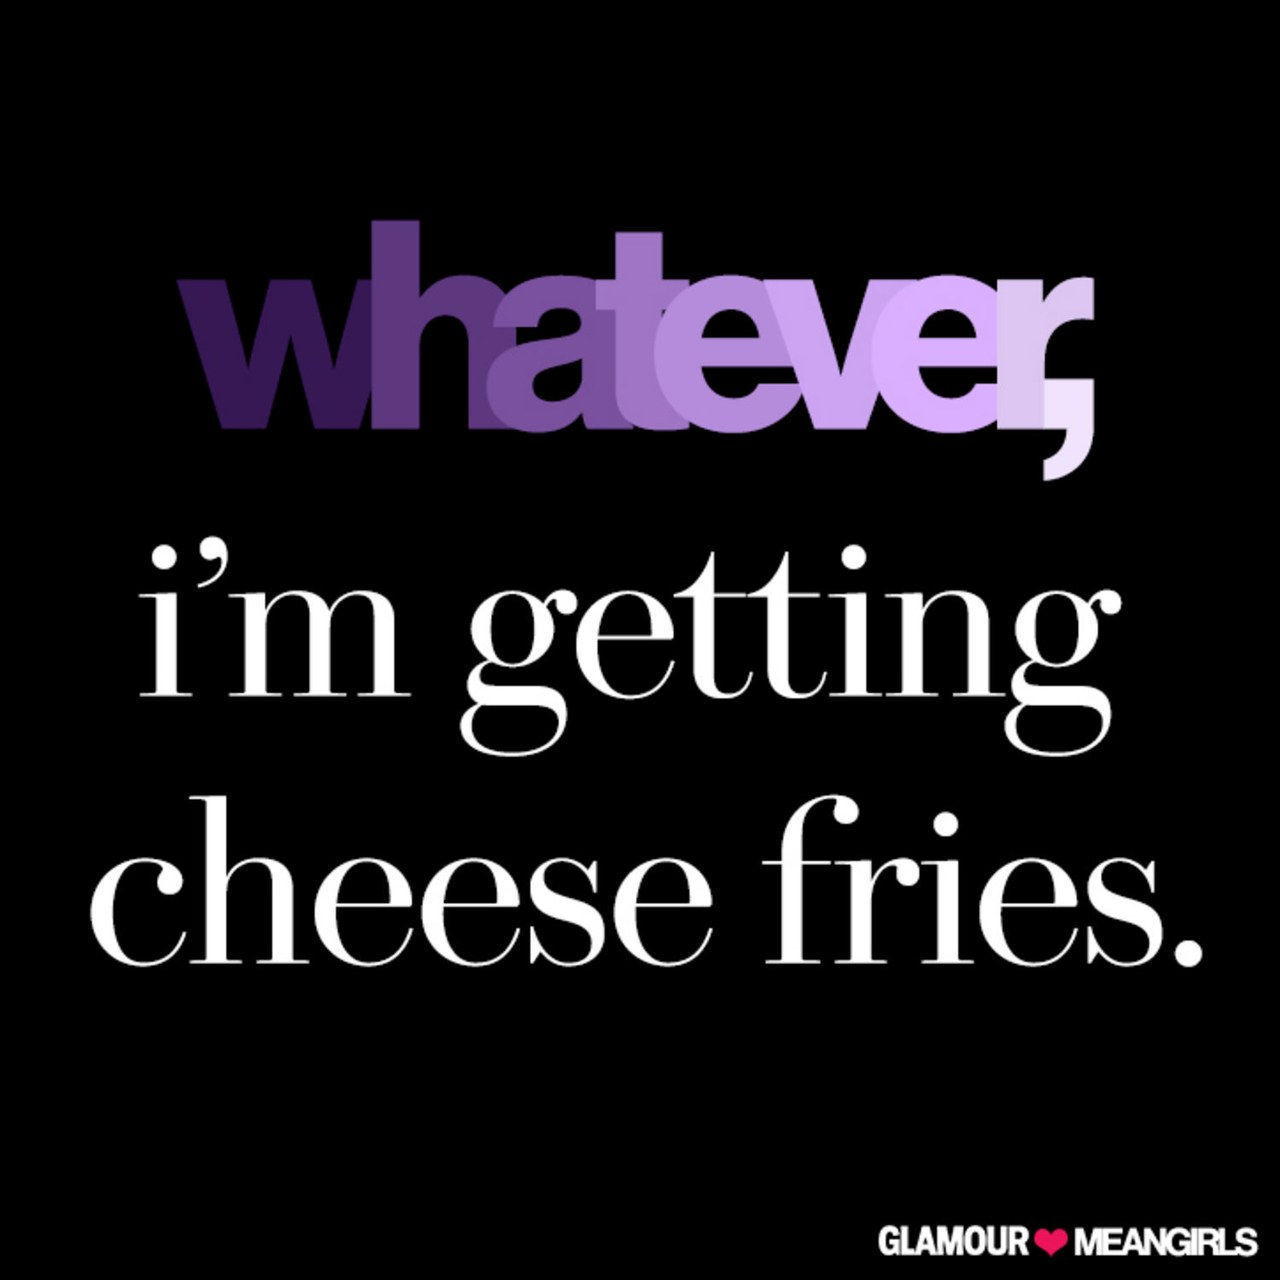 Im getting cheese fries